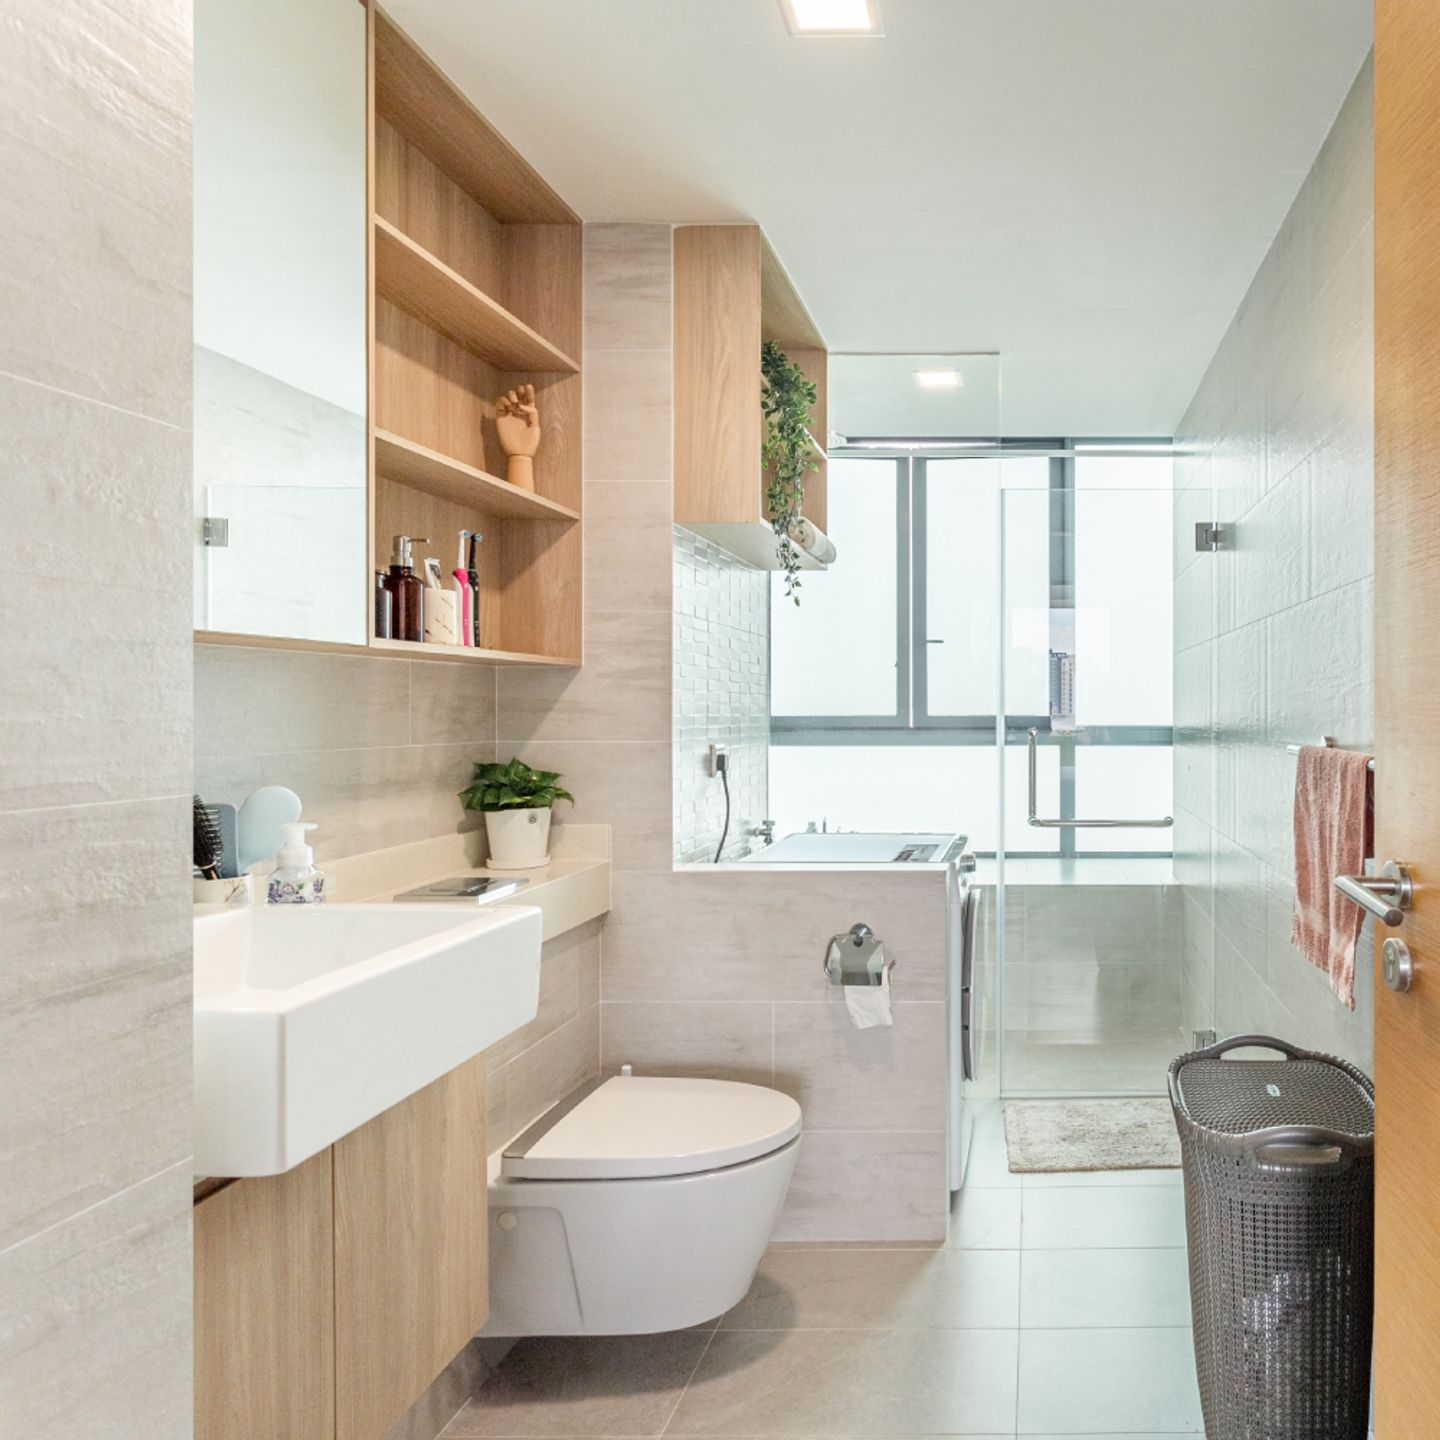 Neutral-Toned Design For Spacious Bathrooms - Livspace